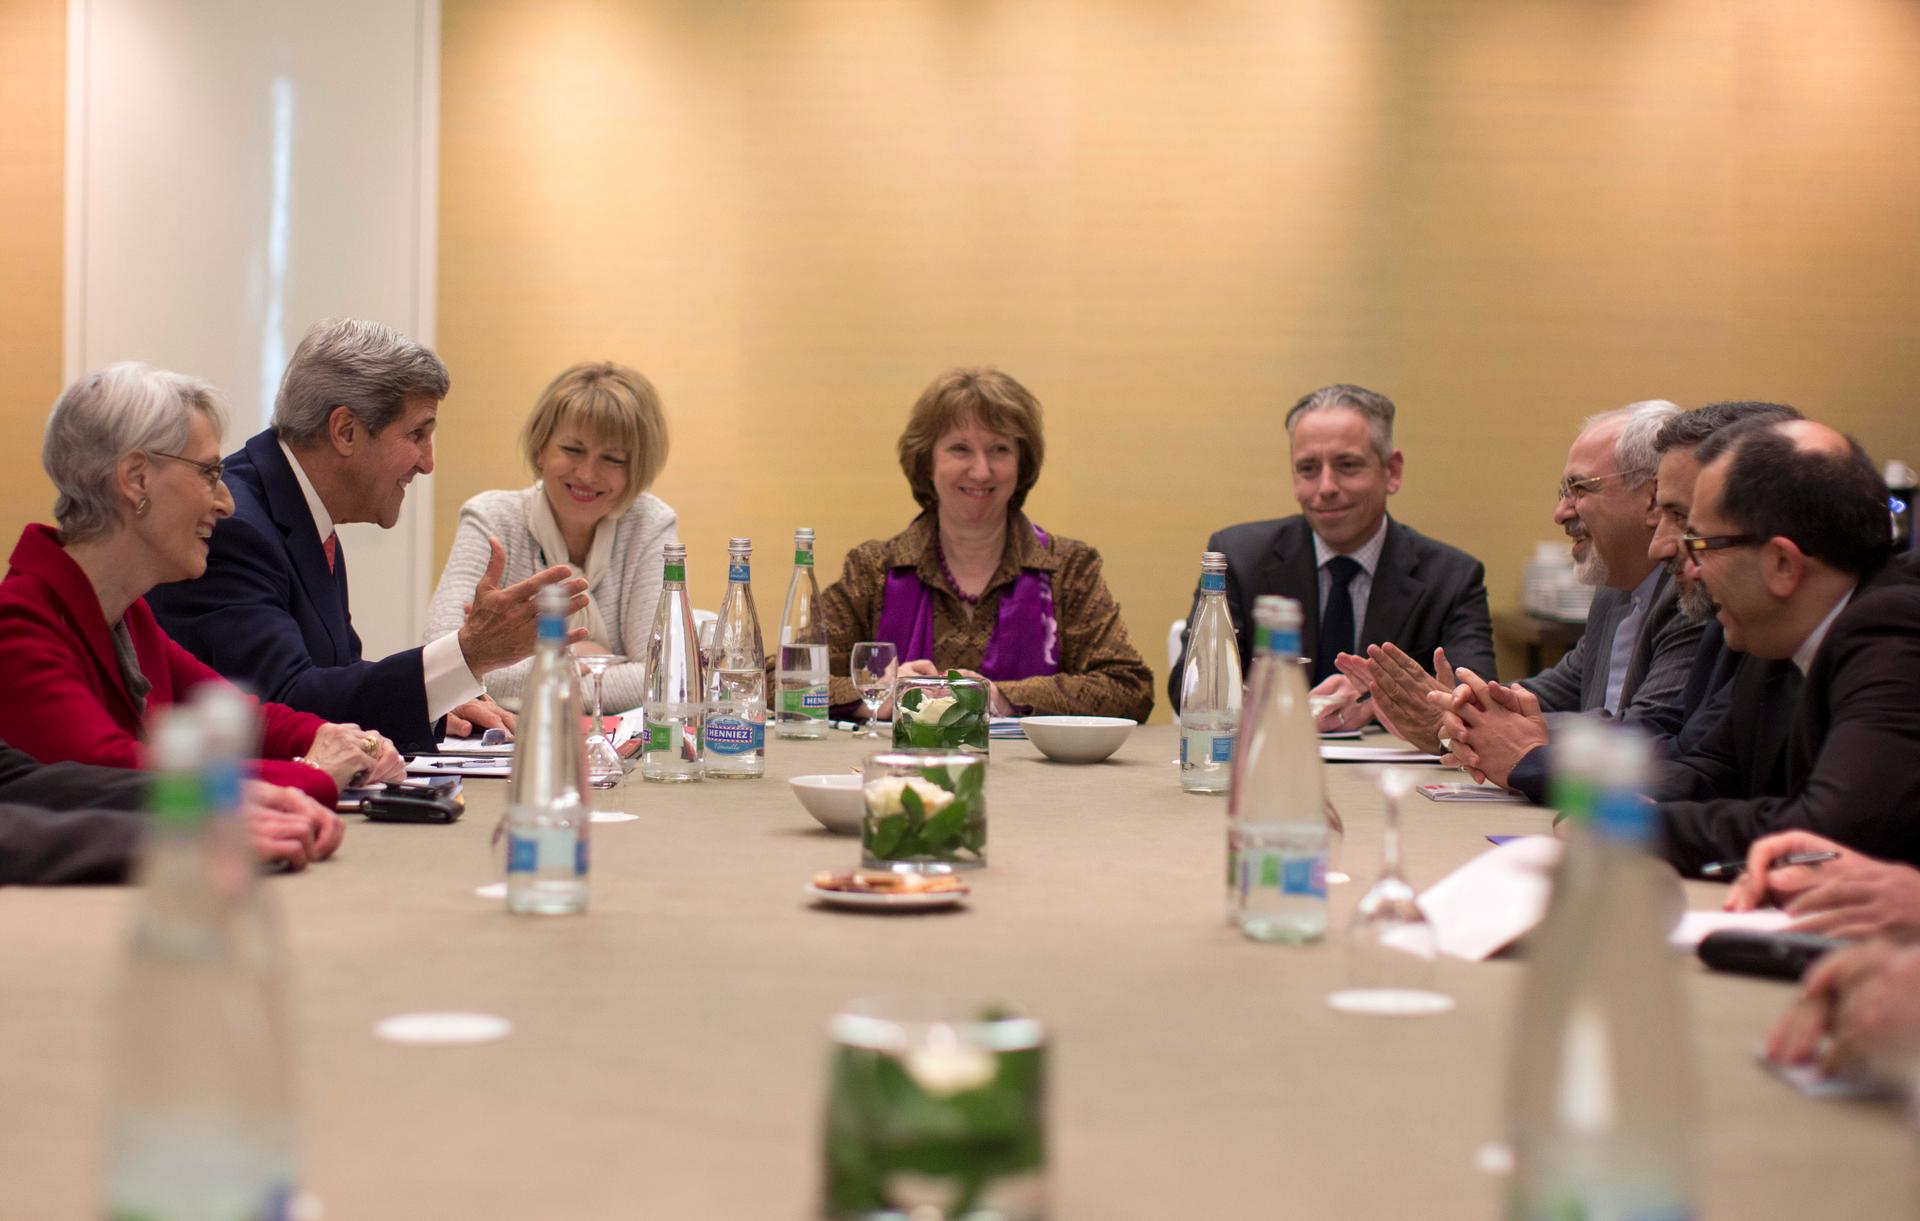 Meeting between Iran and world powers in Geneva